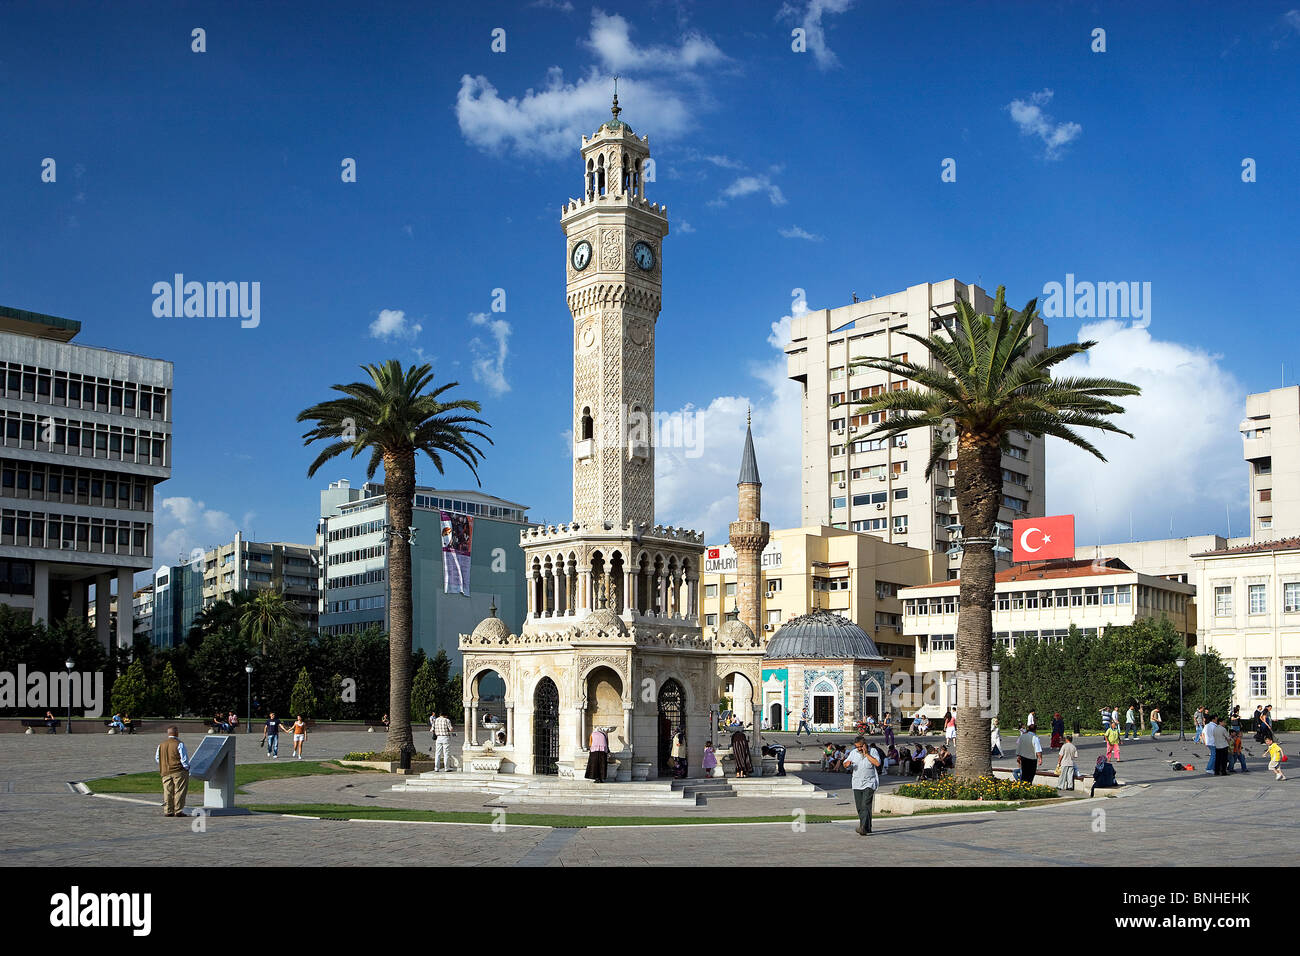 Juni 2008 Türkei Izmir Stadt Konak Meydani Square Uhrturm Saat Kulesi Stockfoto